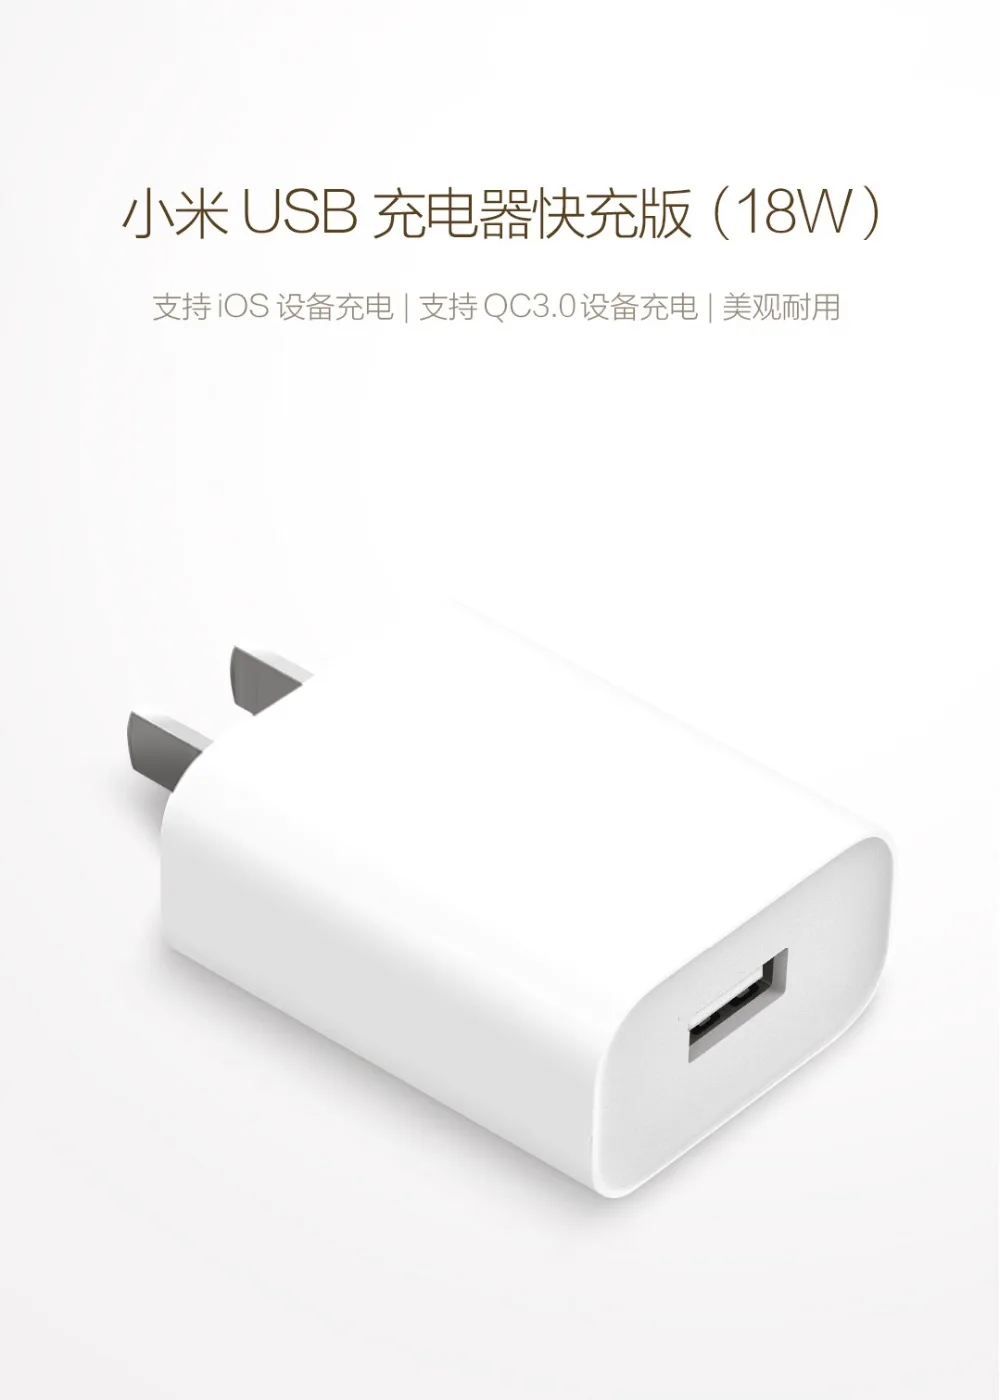 Зарядка для телефона сяоми. Xiaomi QC3.0 quick Charger White (MDY-08-ei). СЗУ Xiaomi 18w Original белый. Xiaomi MDY-08-eh зарядное устройство. Зарядное устройство Xiaomi 18w.